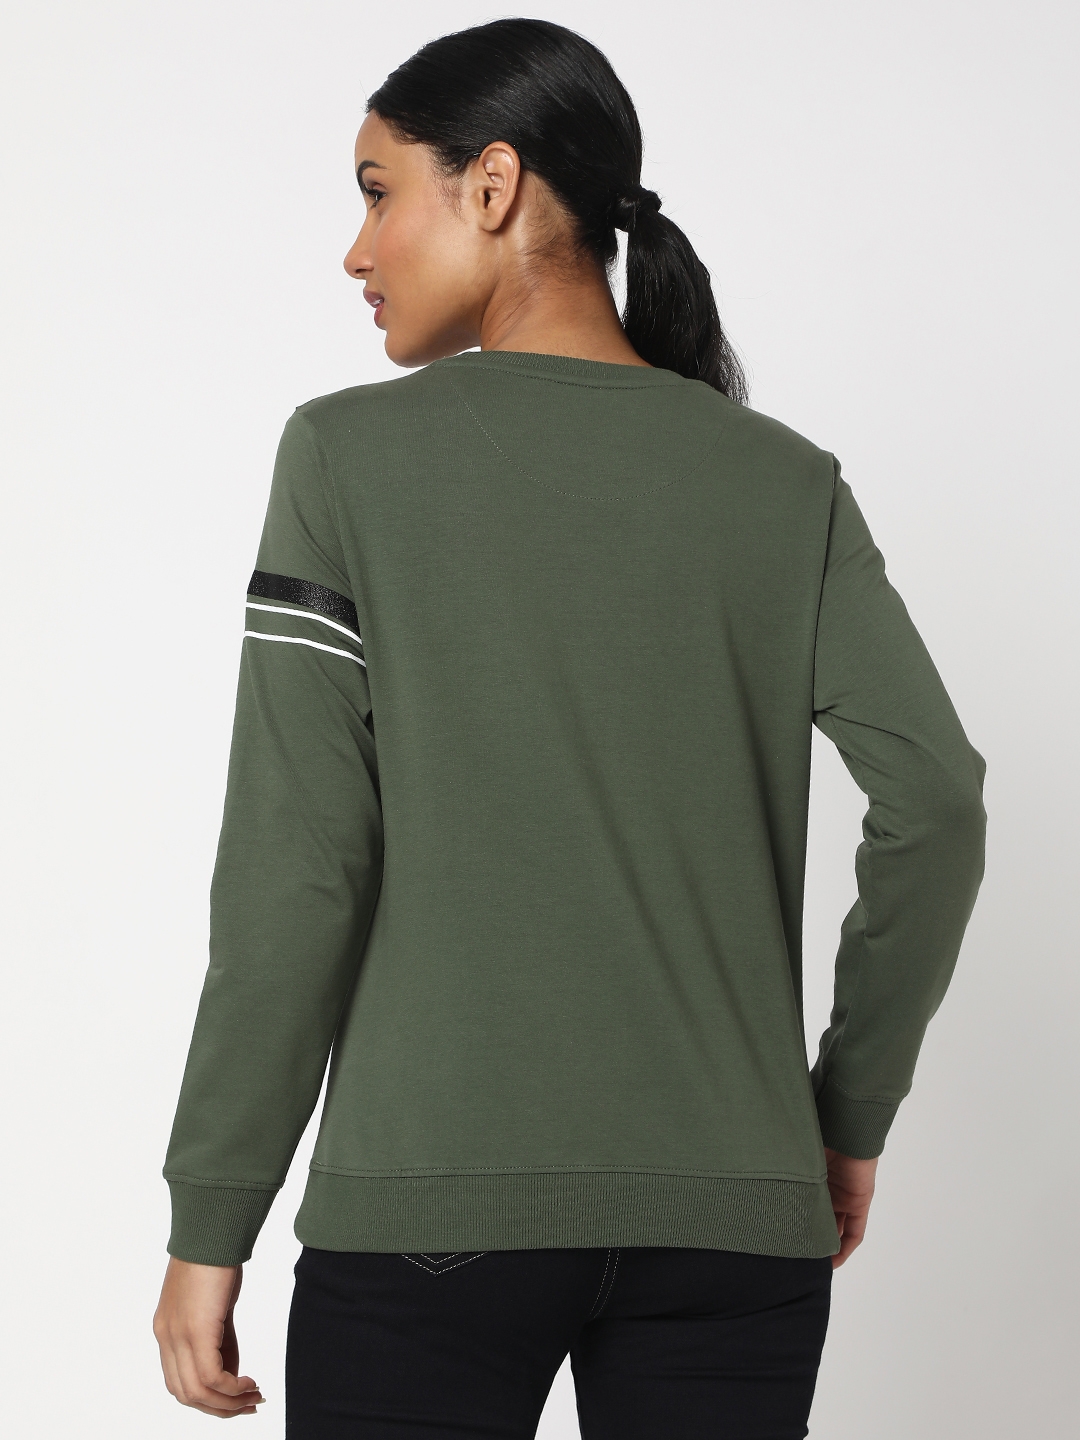 spykar | Spykar Olive Green Cotton Blend Full Sleeve Round Neck Sweatshirt For Women 3